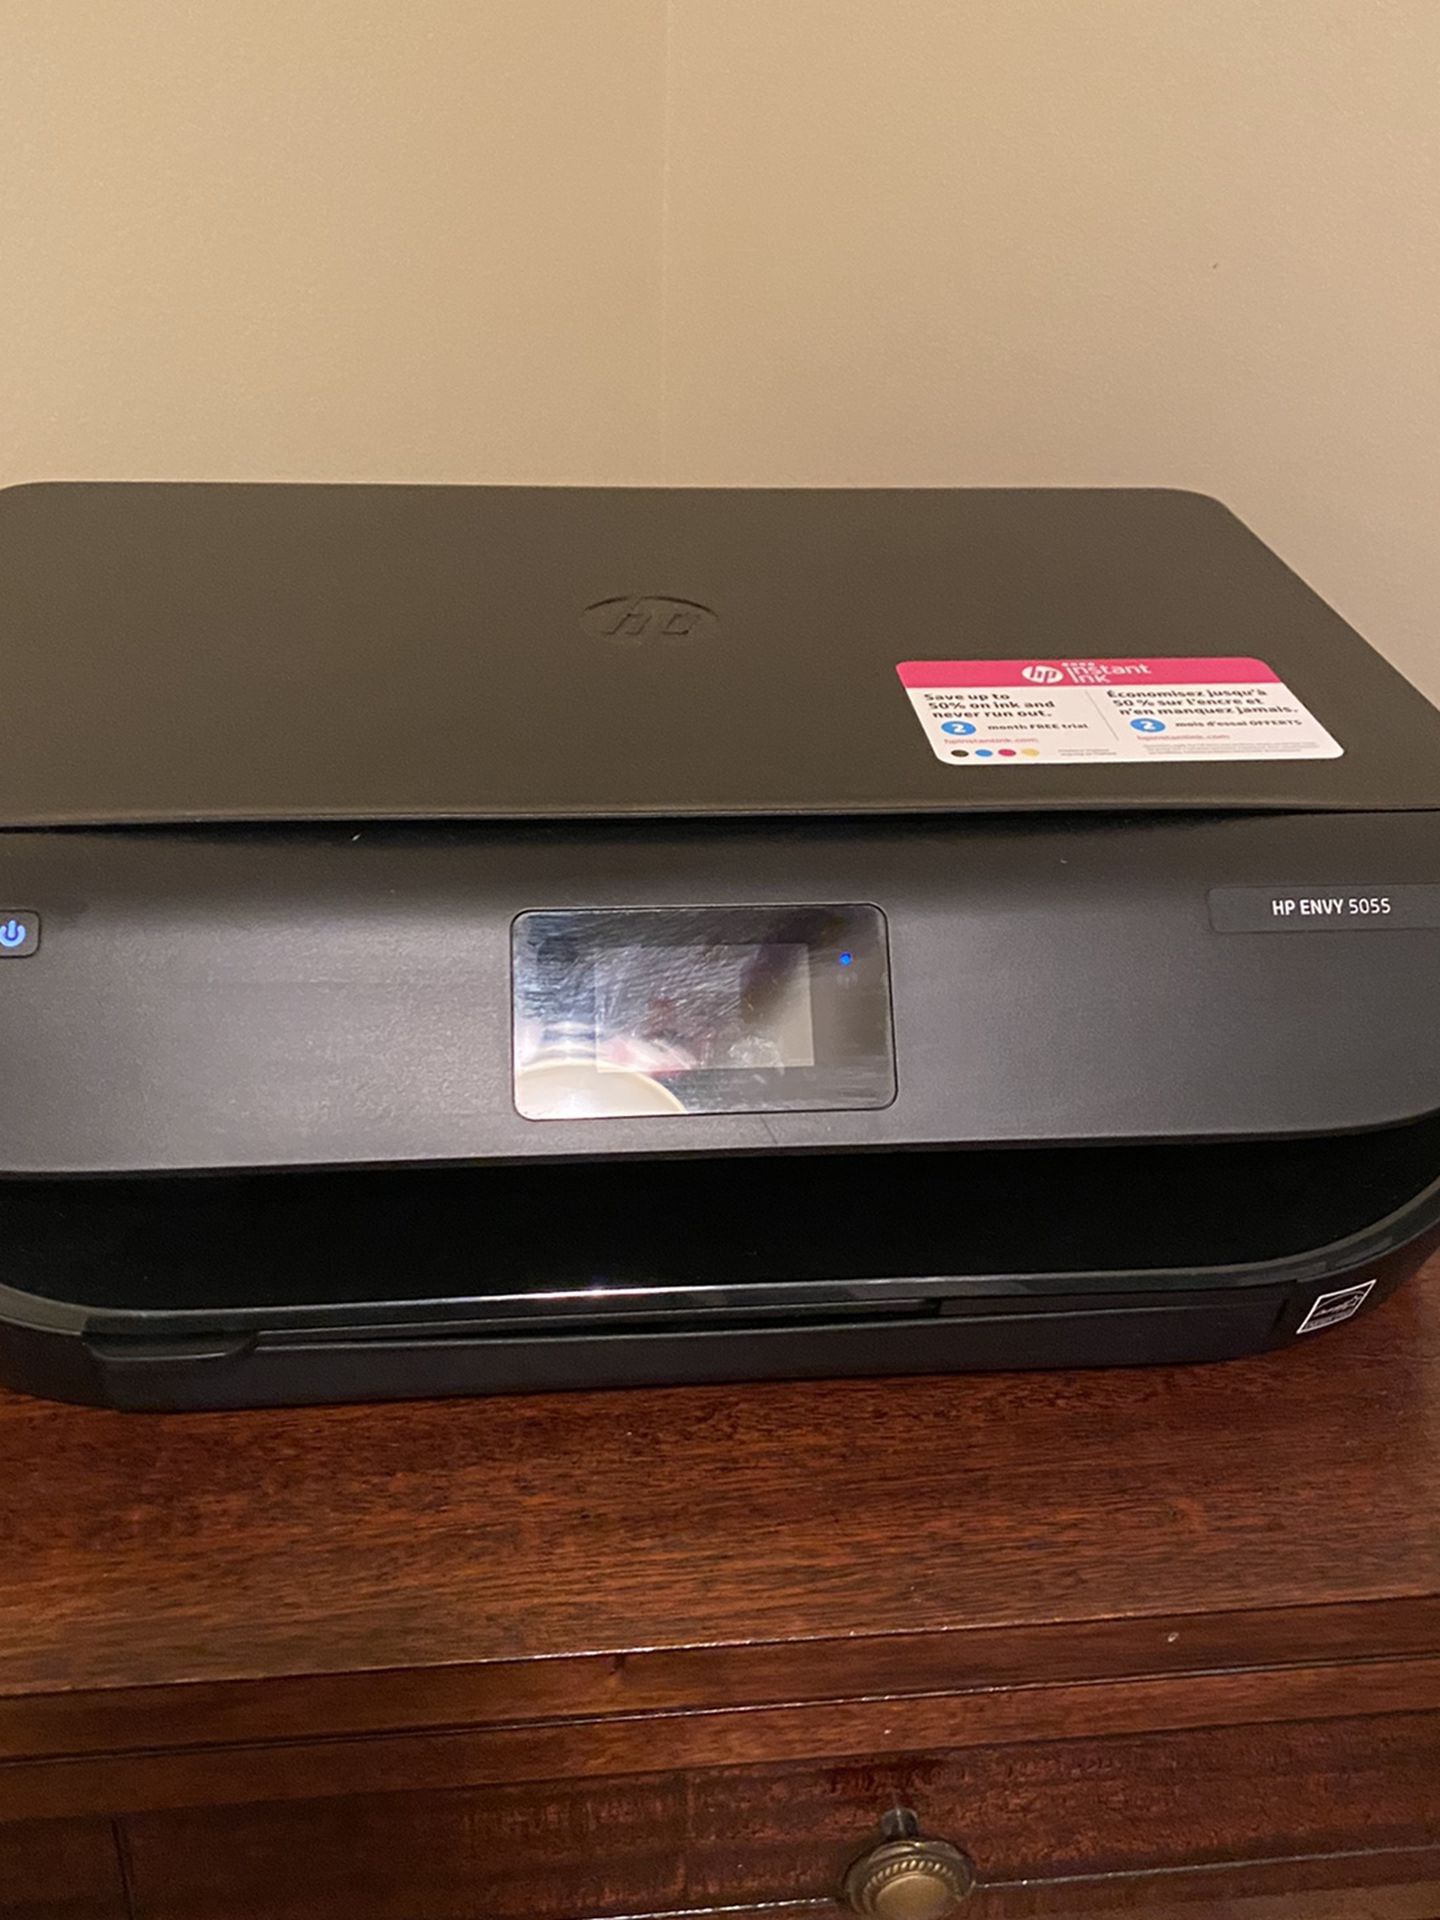 HP ENVY 5000 Printer, Copier, Scanner